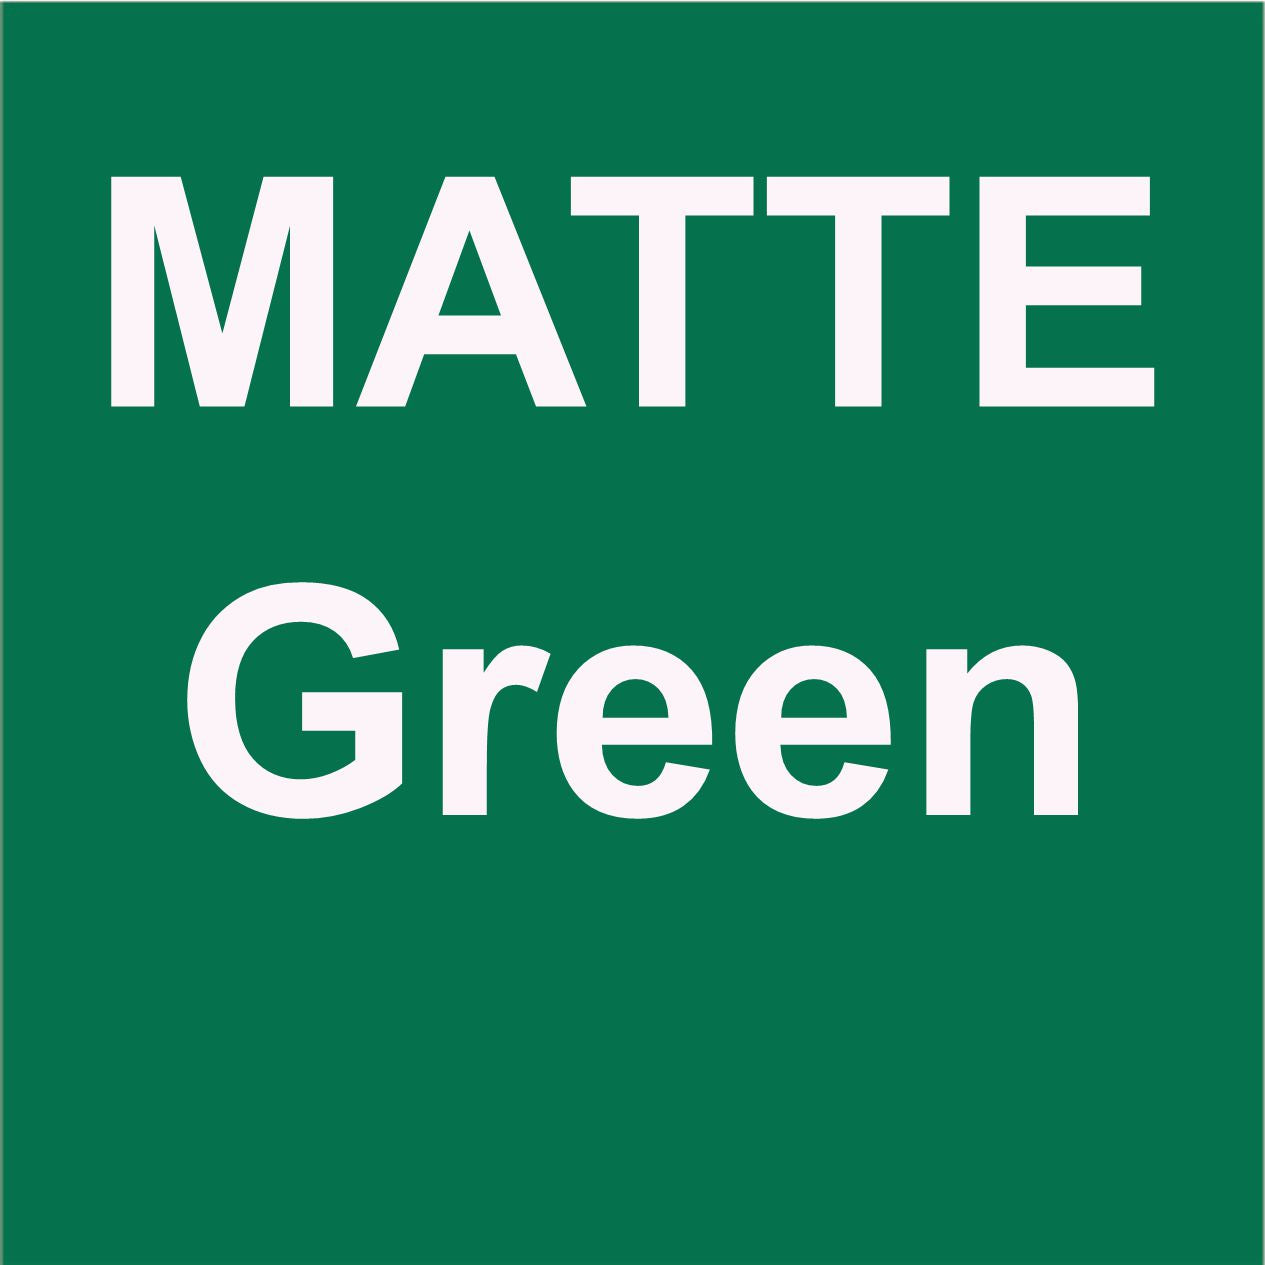 Siser EasyWeed MATTE Green HTV Choose Your Length